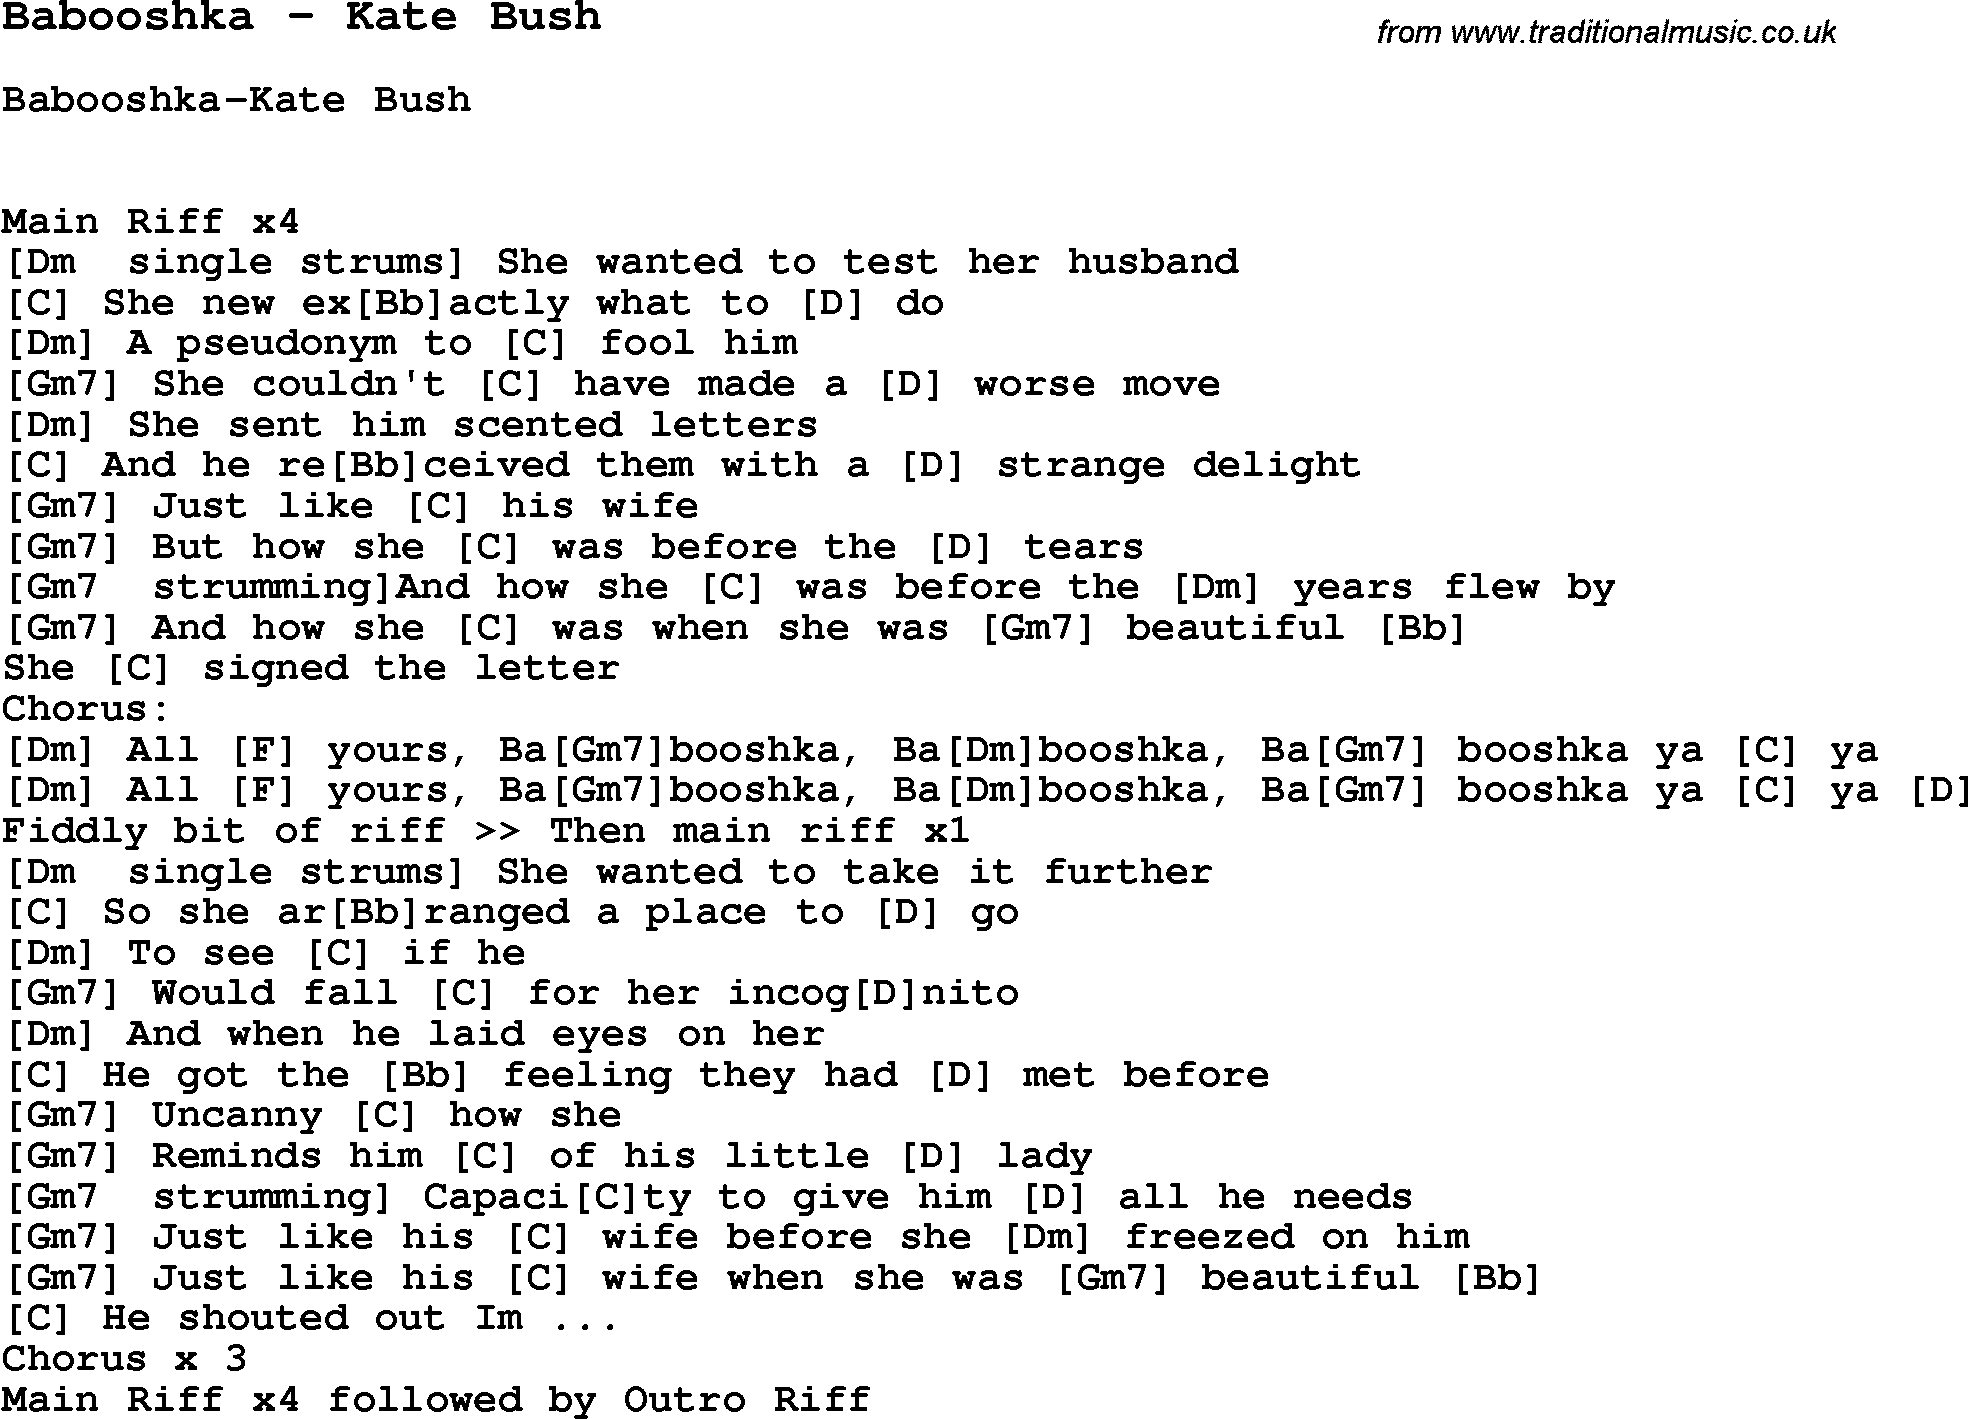 Song Babooshka by Kate Bush, with lyrics for vocal performance and accompaniment chords for Ukulele, Guitar Banjo etc.